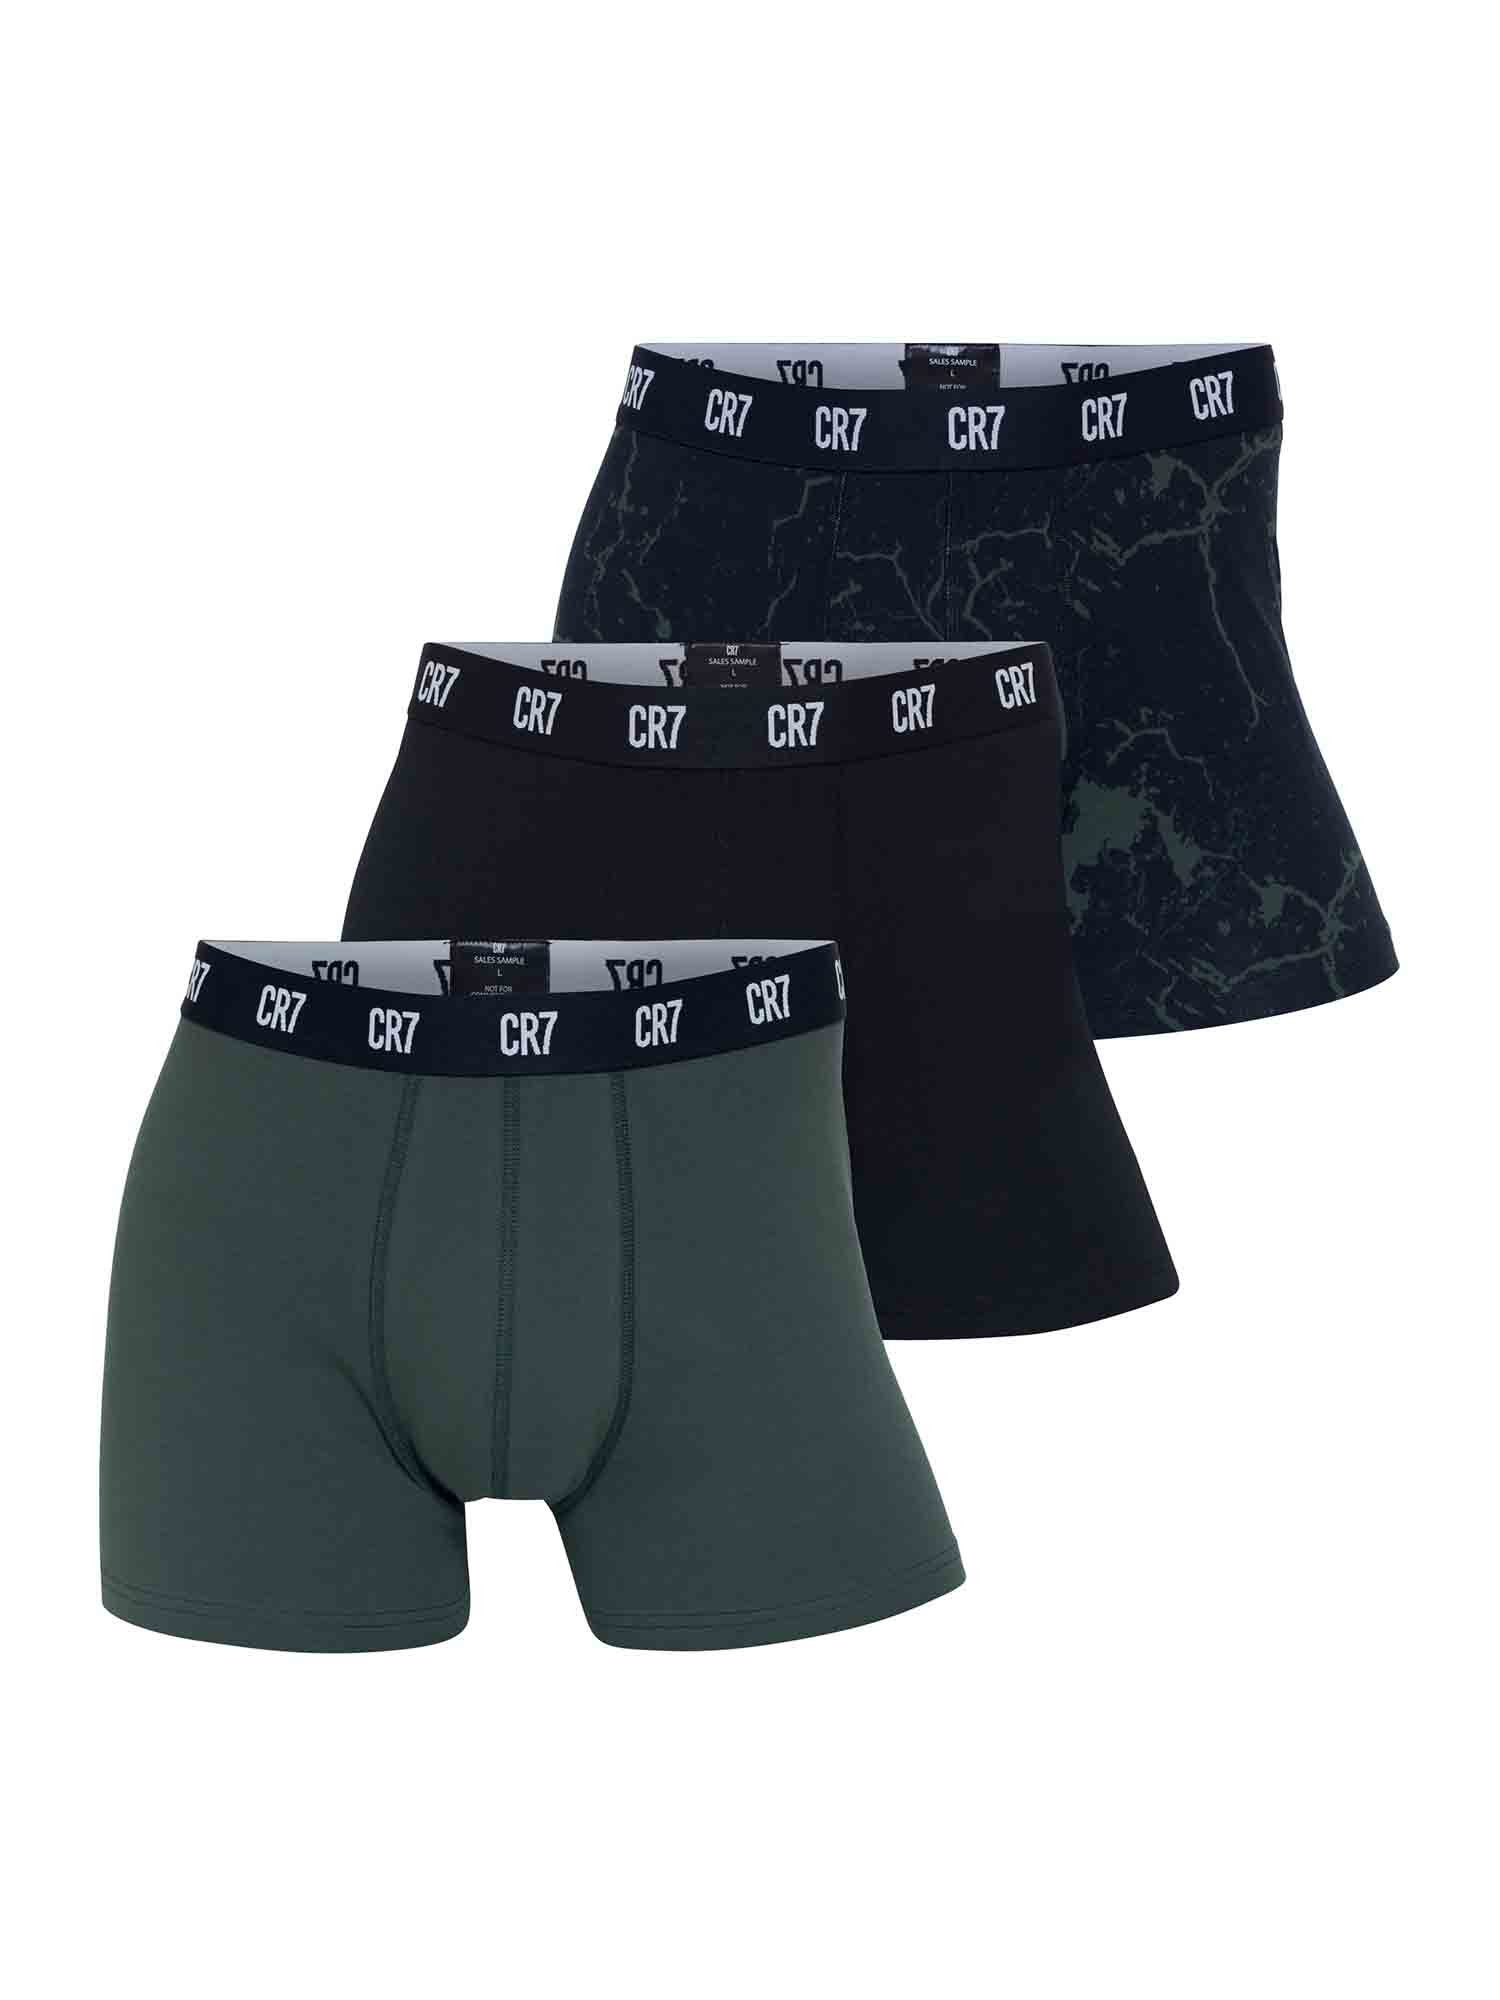 Multi (3-St) Männer 28 Retro Herren CR7 Boxershorts Retro Pants Pants Trunks Multipack